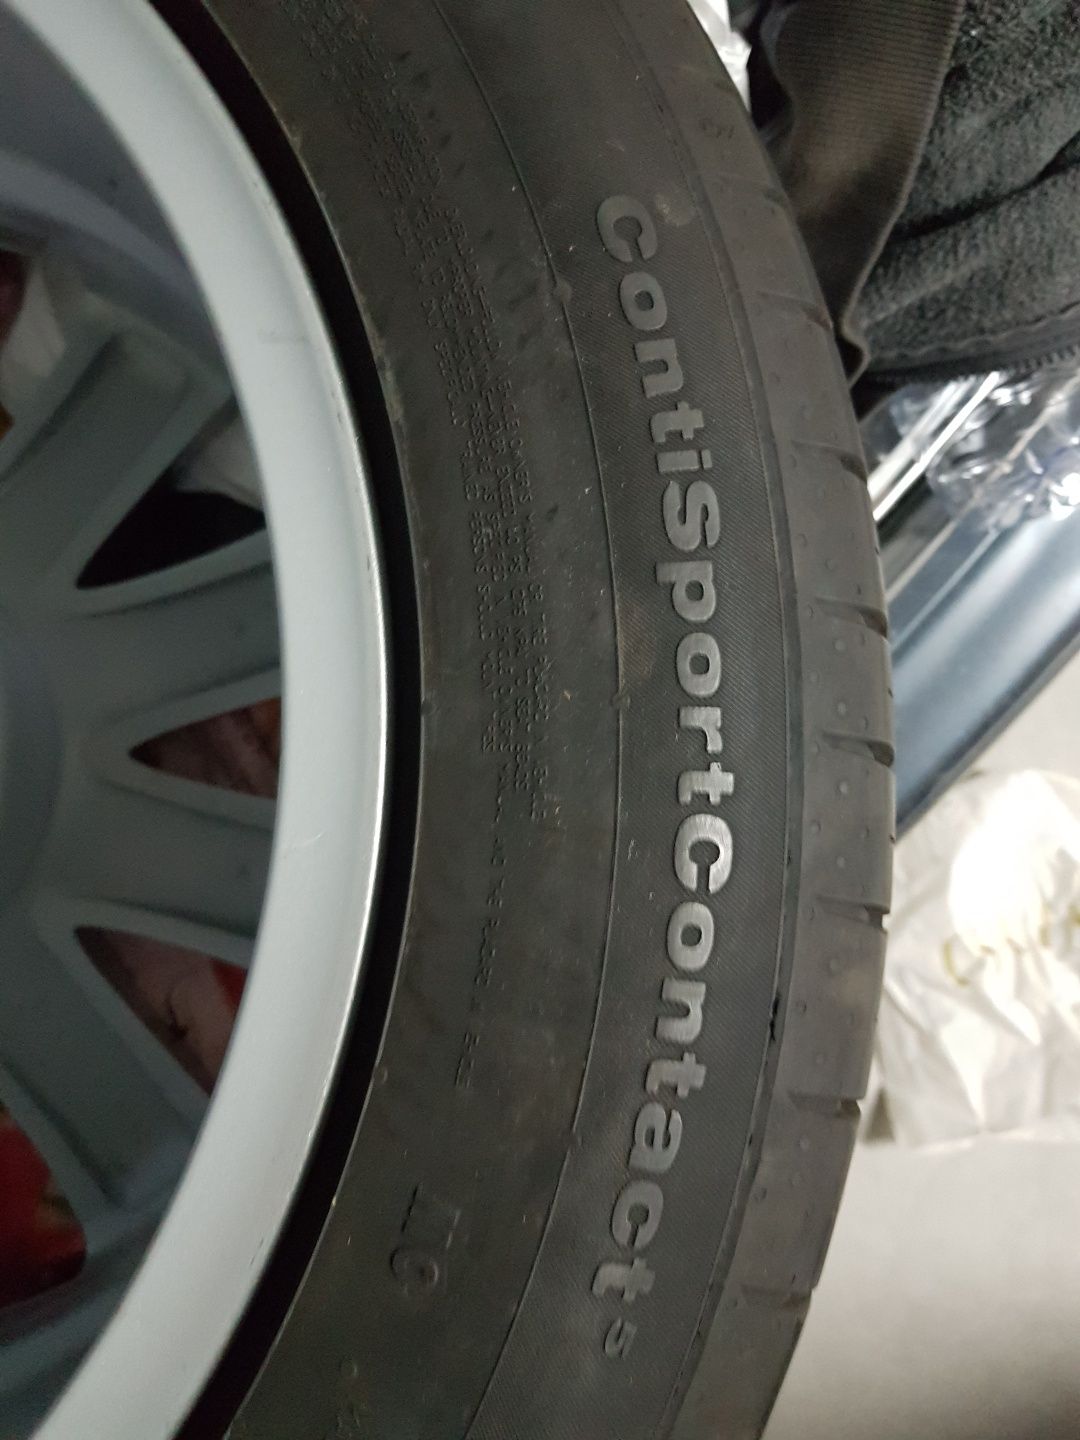 Jantes Mercedes S Class c/ pneus como novos homologados mercedes